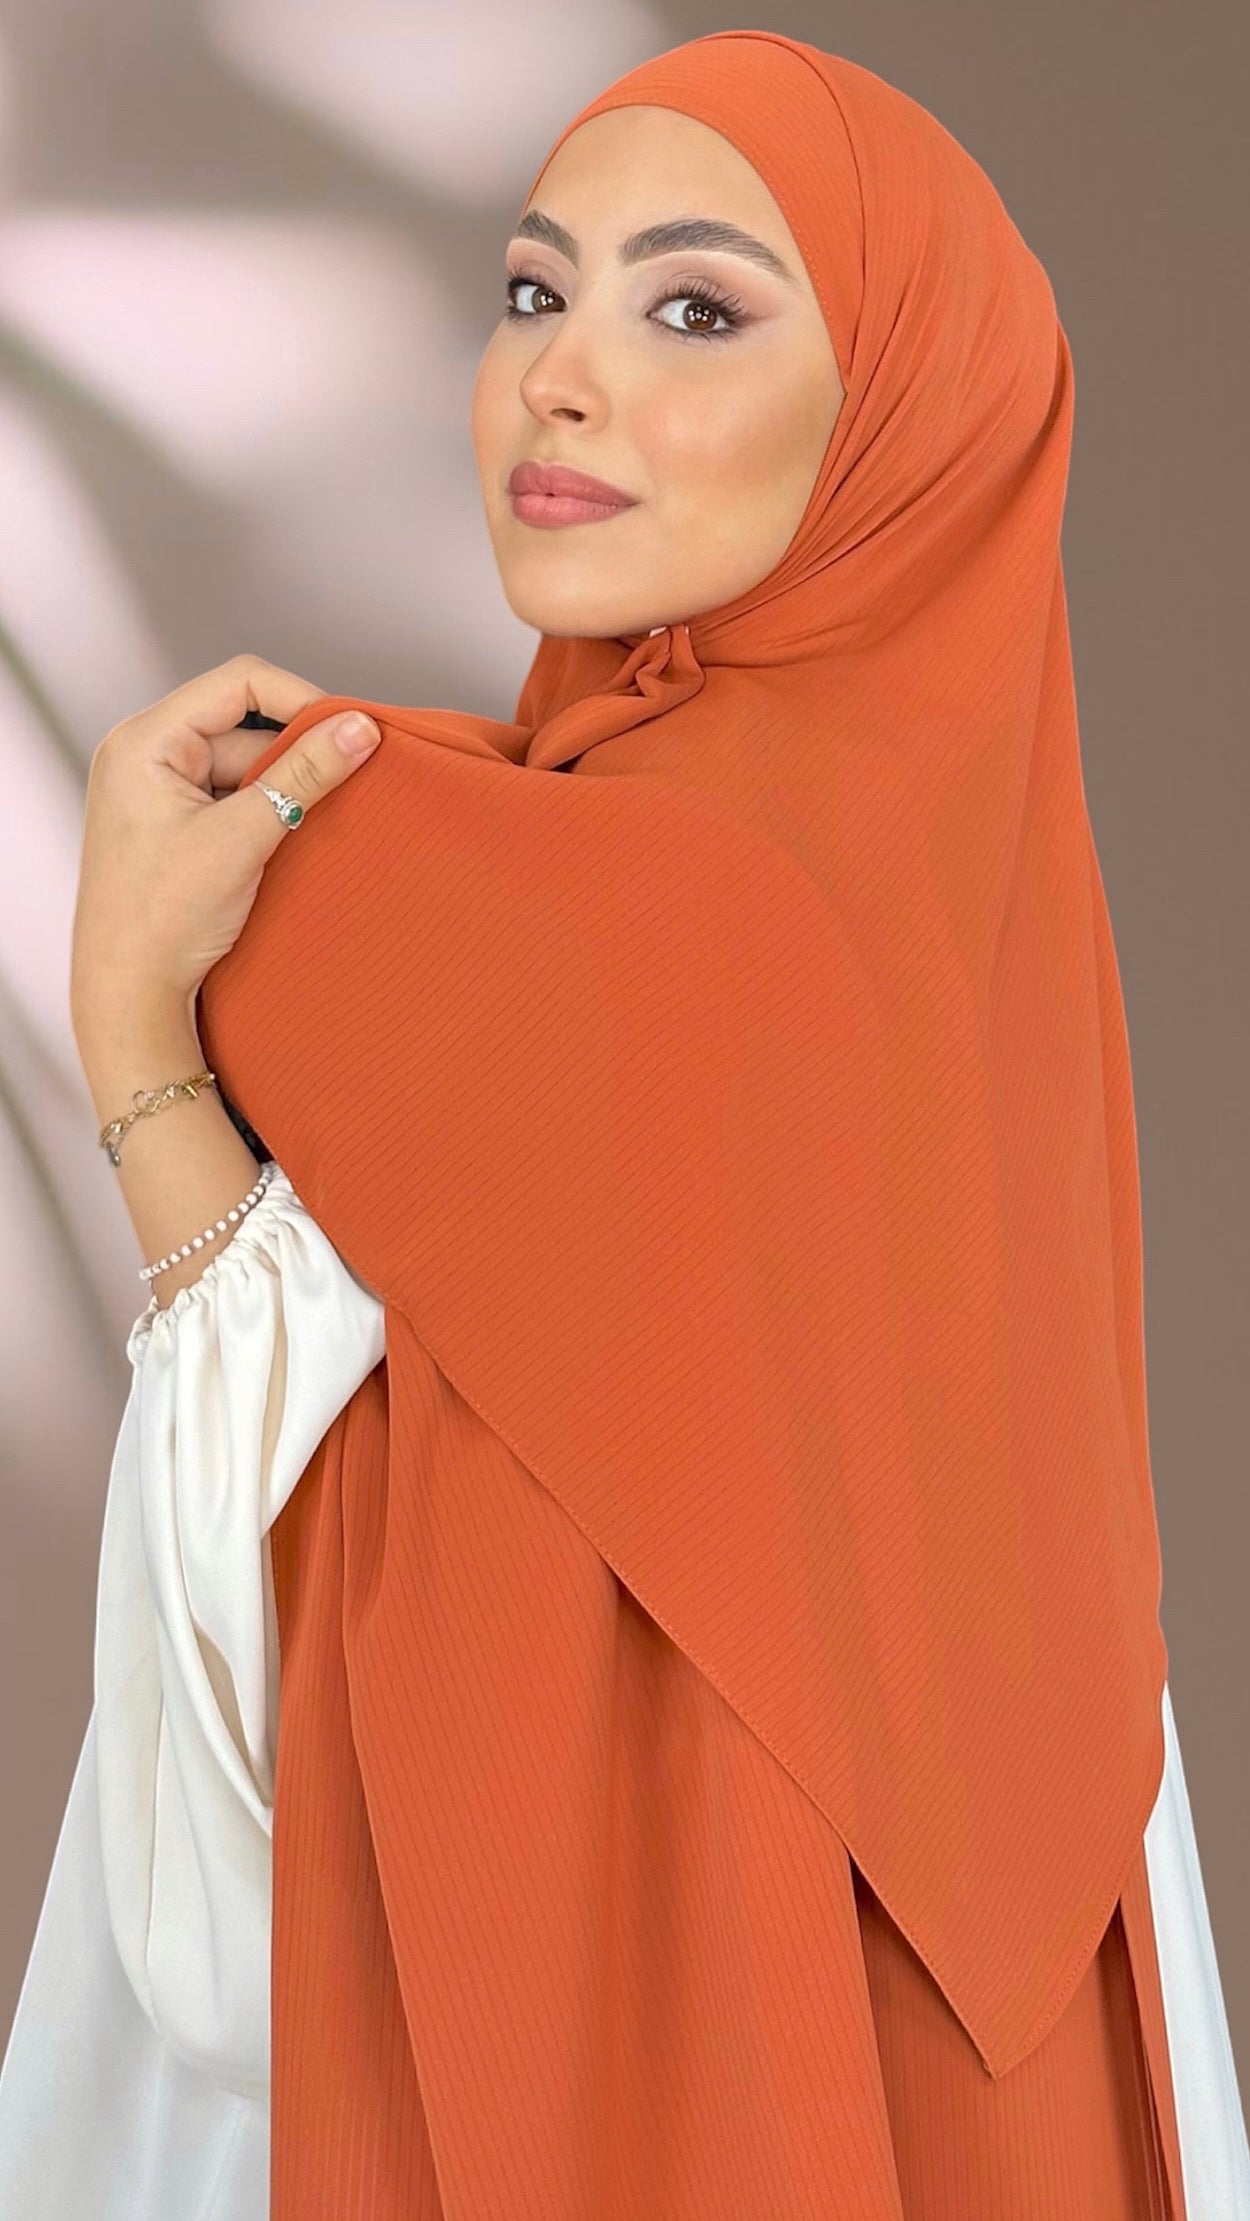 Striped Hijab - Hijab Paradise -Hijab Pronto da mettere - hijab rigato - elastico dietro - donna musulmana - foulard -copricapo- abaya palloncino - sorriso - arancio